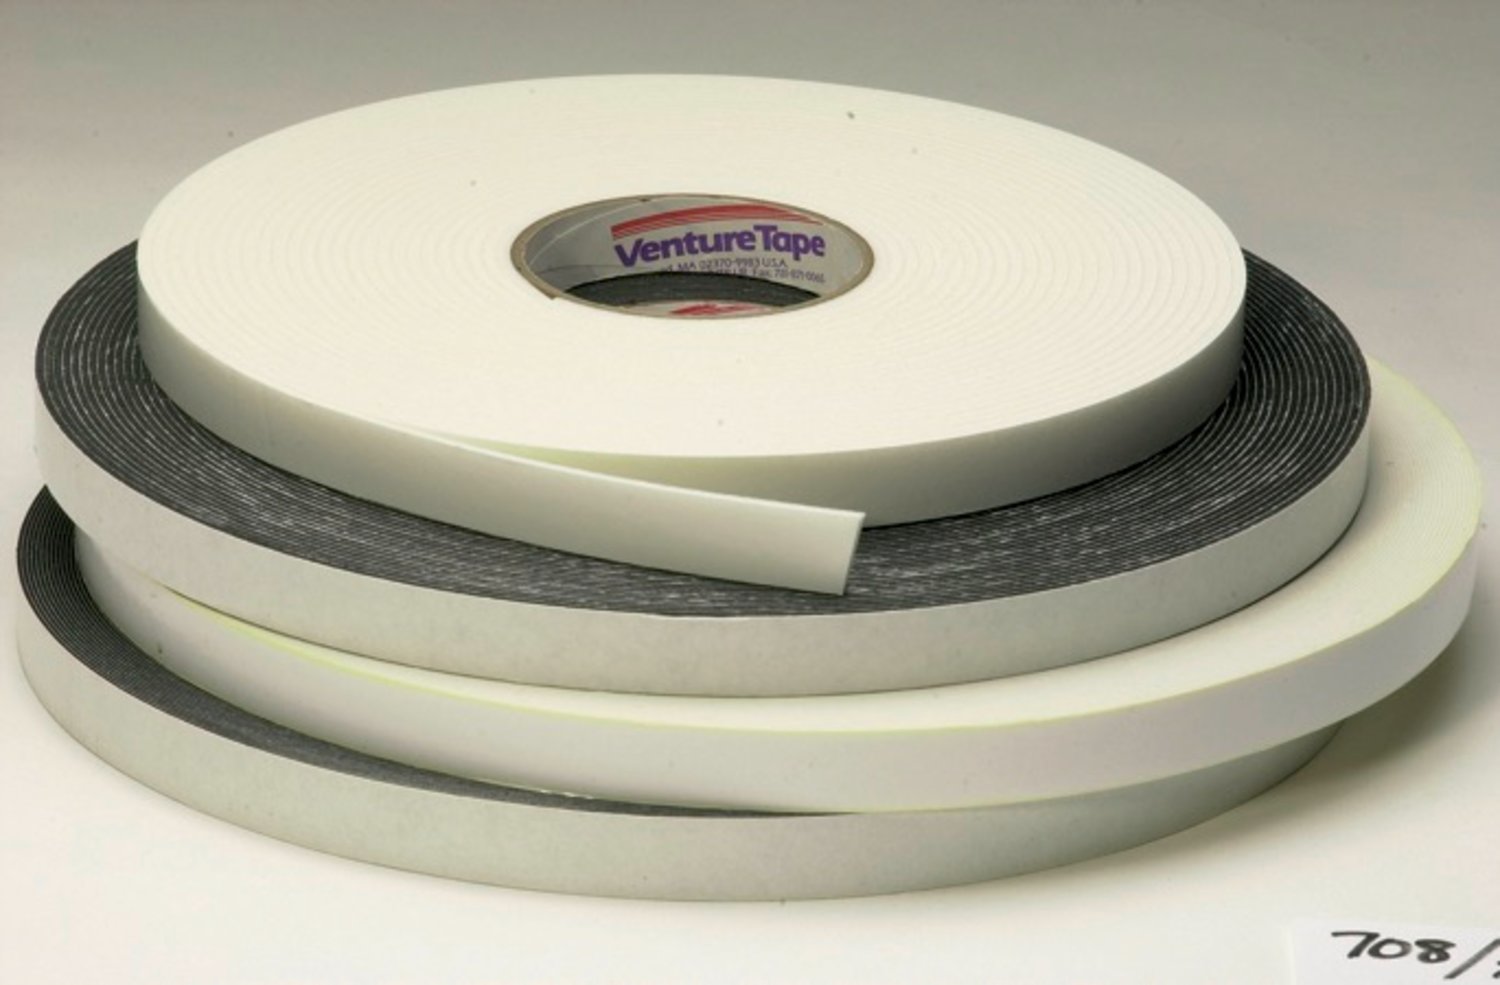 7010379973 - 3M Venture Tape Single Sided 62 mil Polyethylene Foam Glazing Tape
VS716G, Gray, 1/2 in x 150 ft, 62 mil, 40 rolls per case